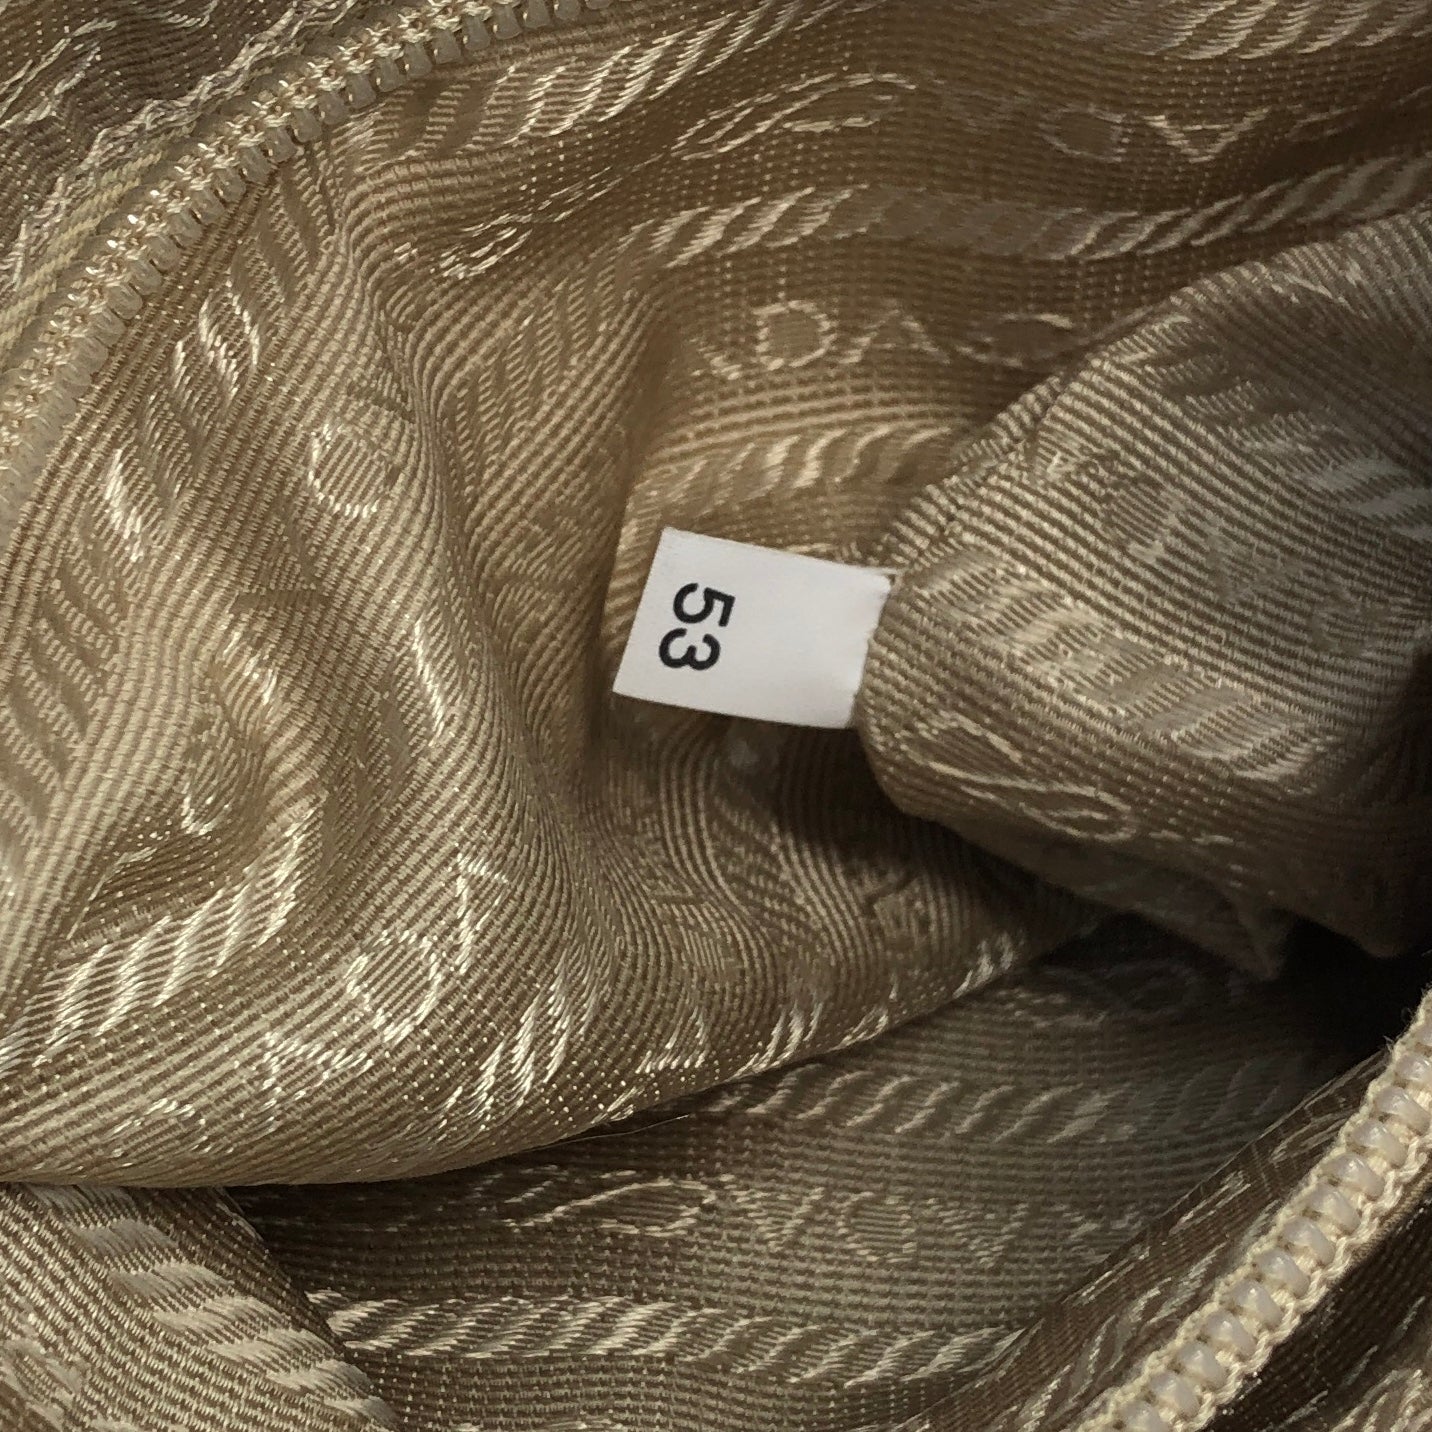 PRADA Triangle Logo Nylon Leather Handbag Hobo bag Beige Vintage